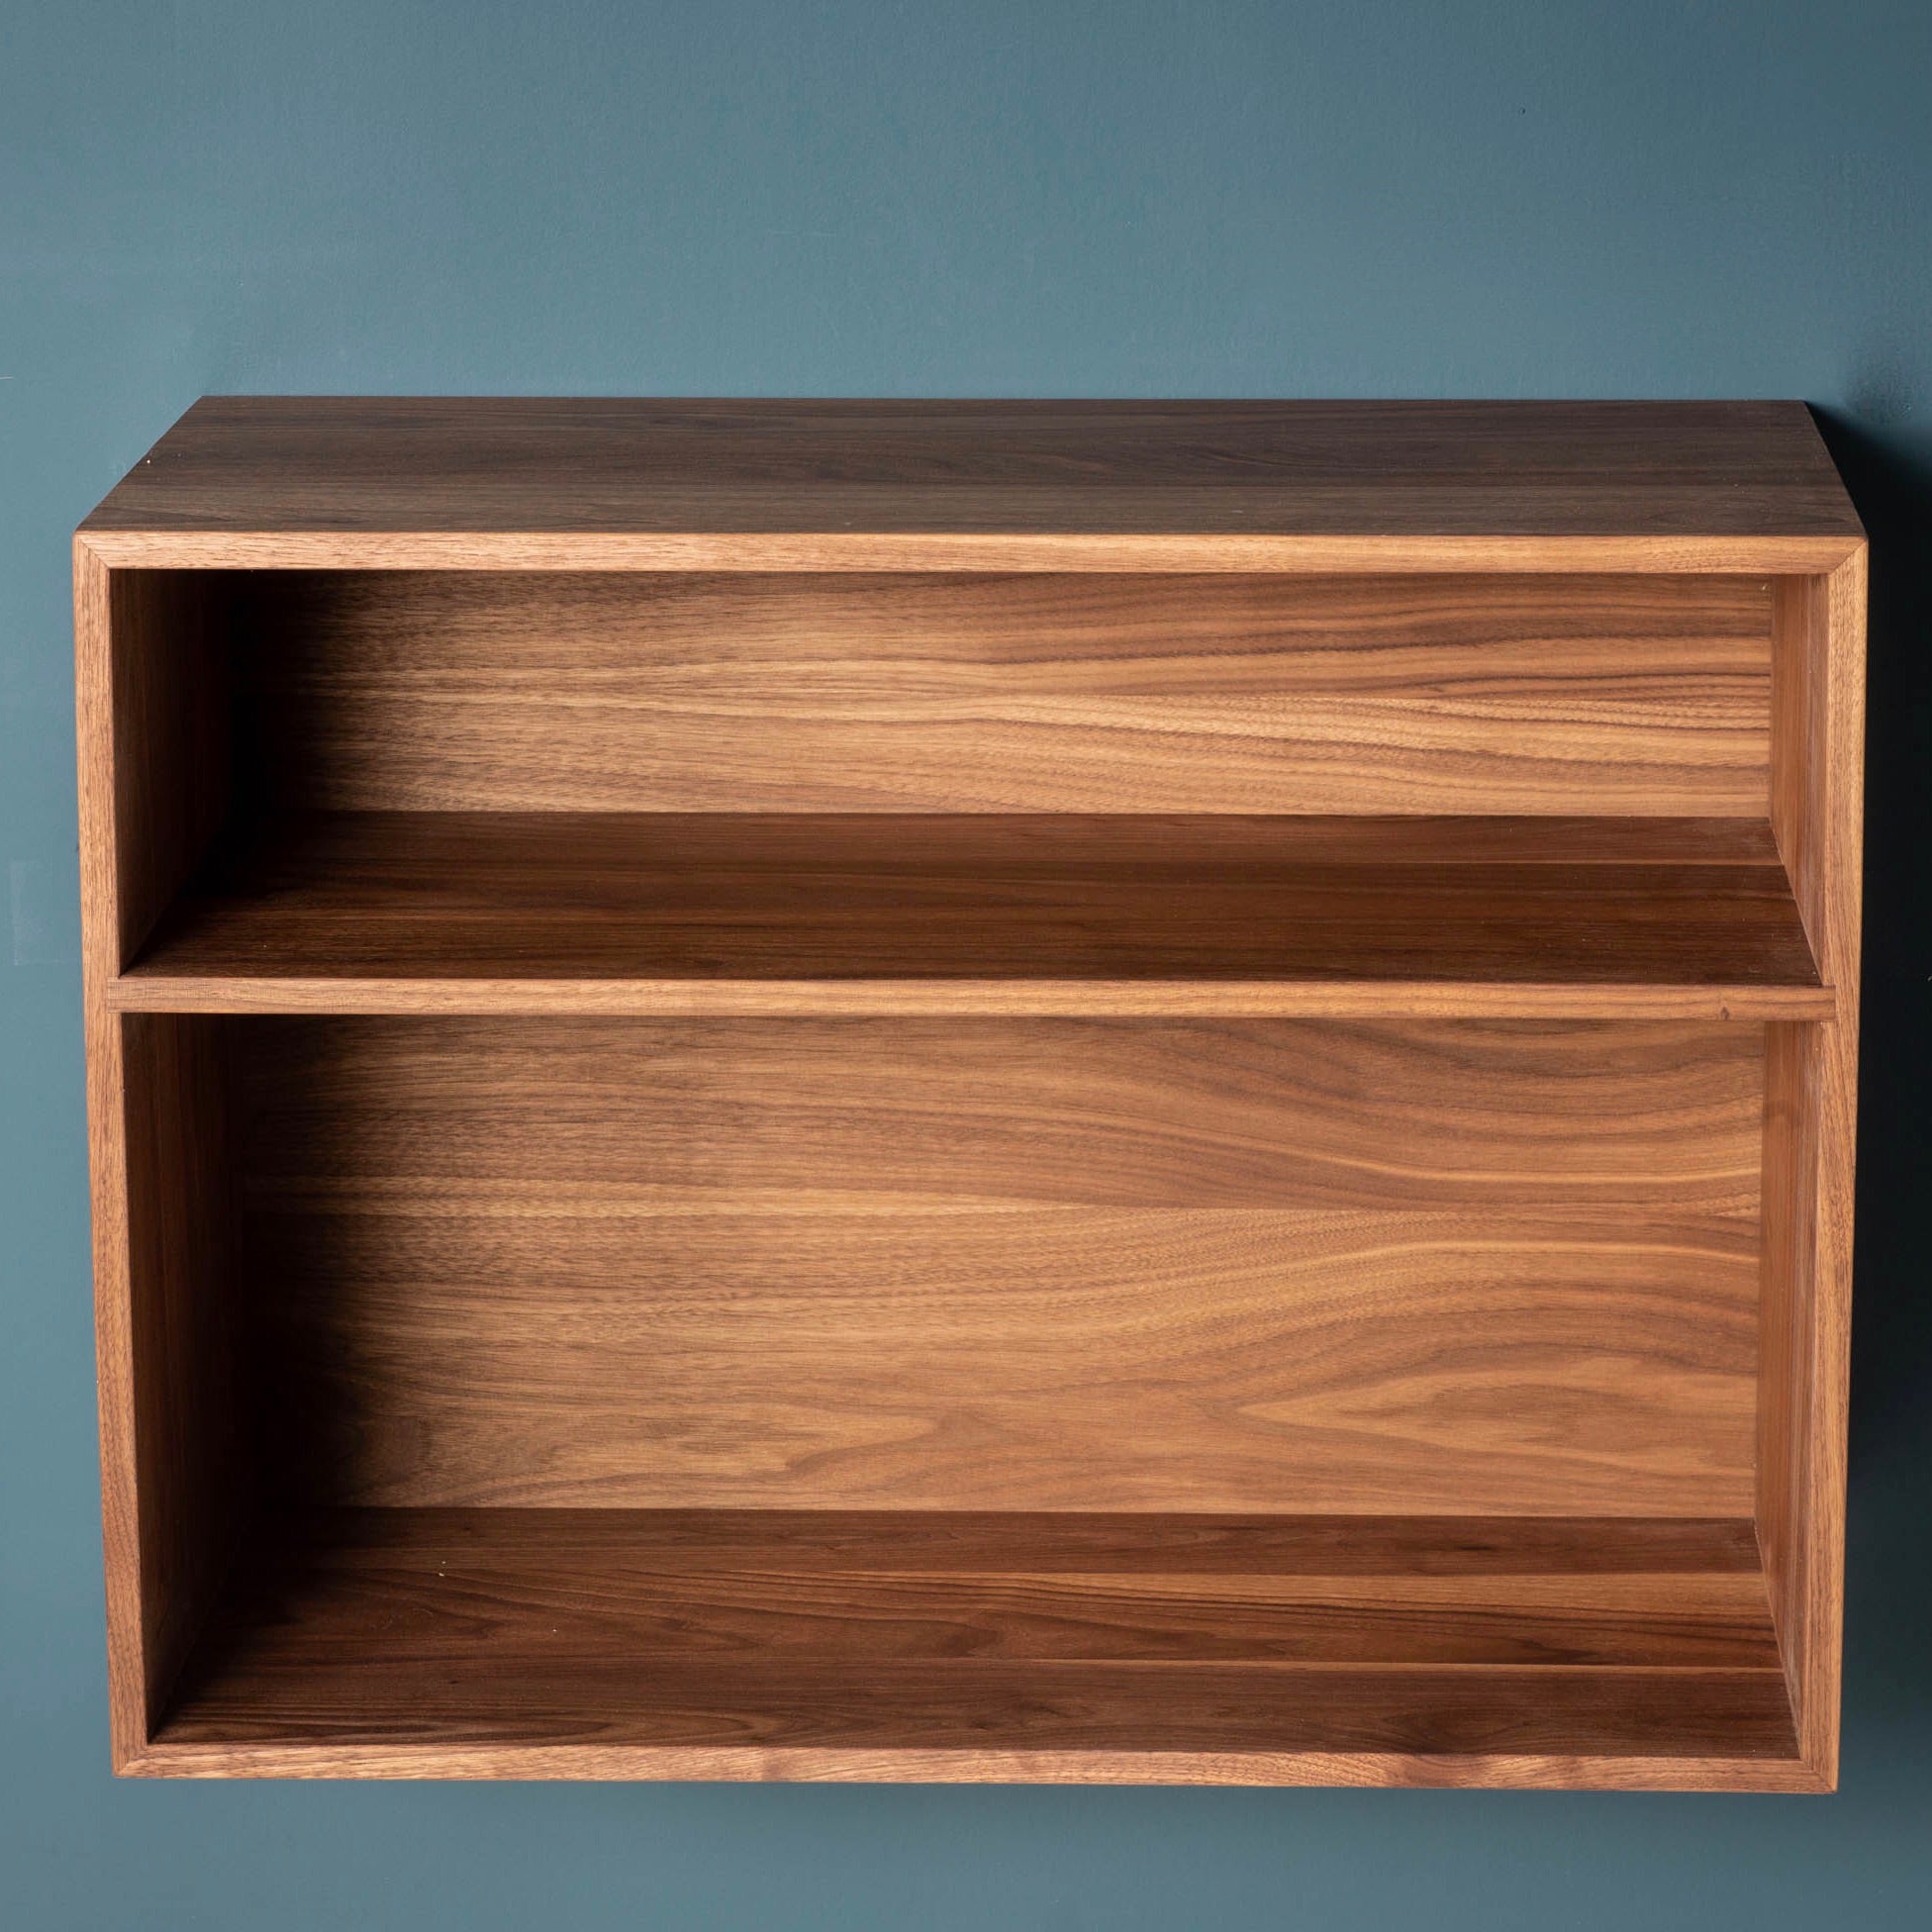 Record Storage / Stereo Cabinet in Walnut - Krøvel Furniture Co. Handmade in Maine